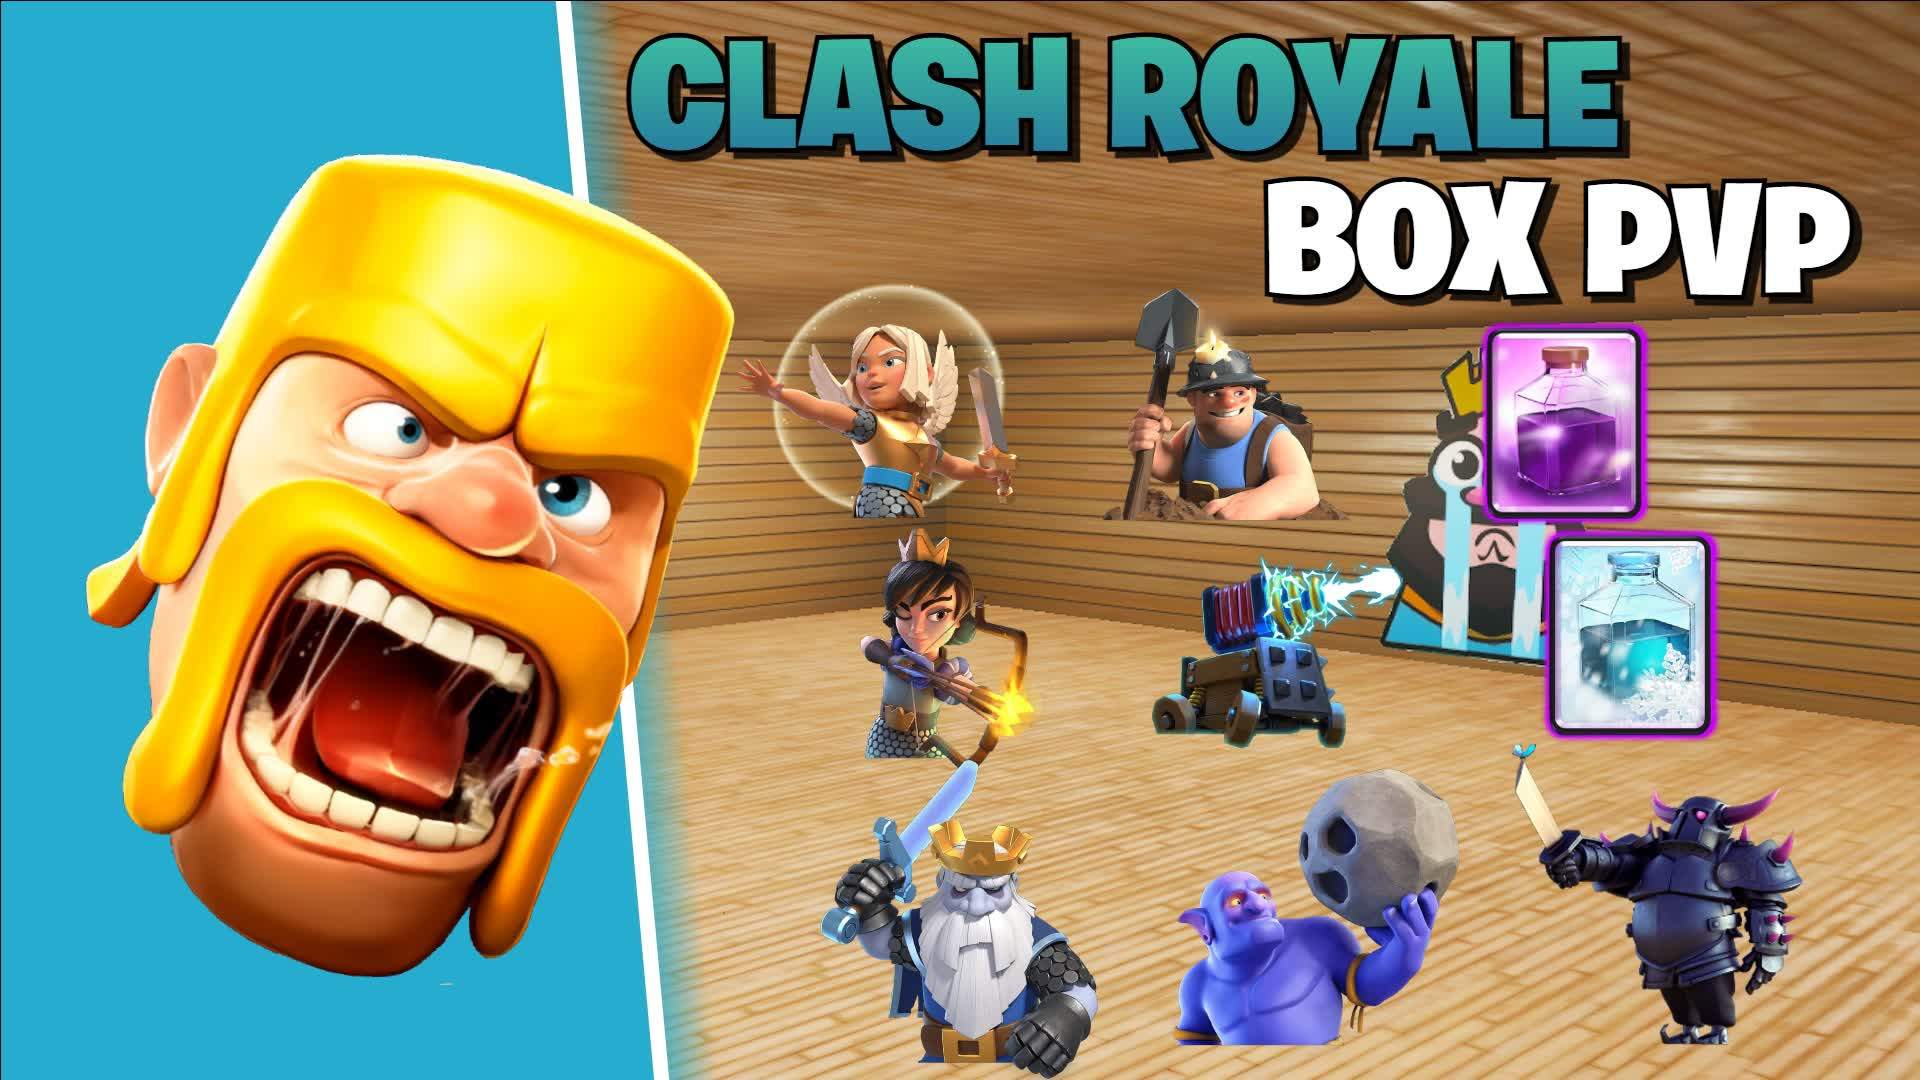 Clash Royale Boxfight pvp 8275-8668-7040